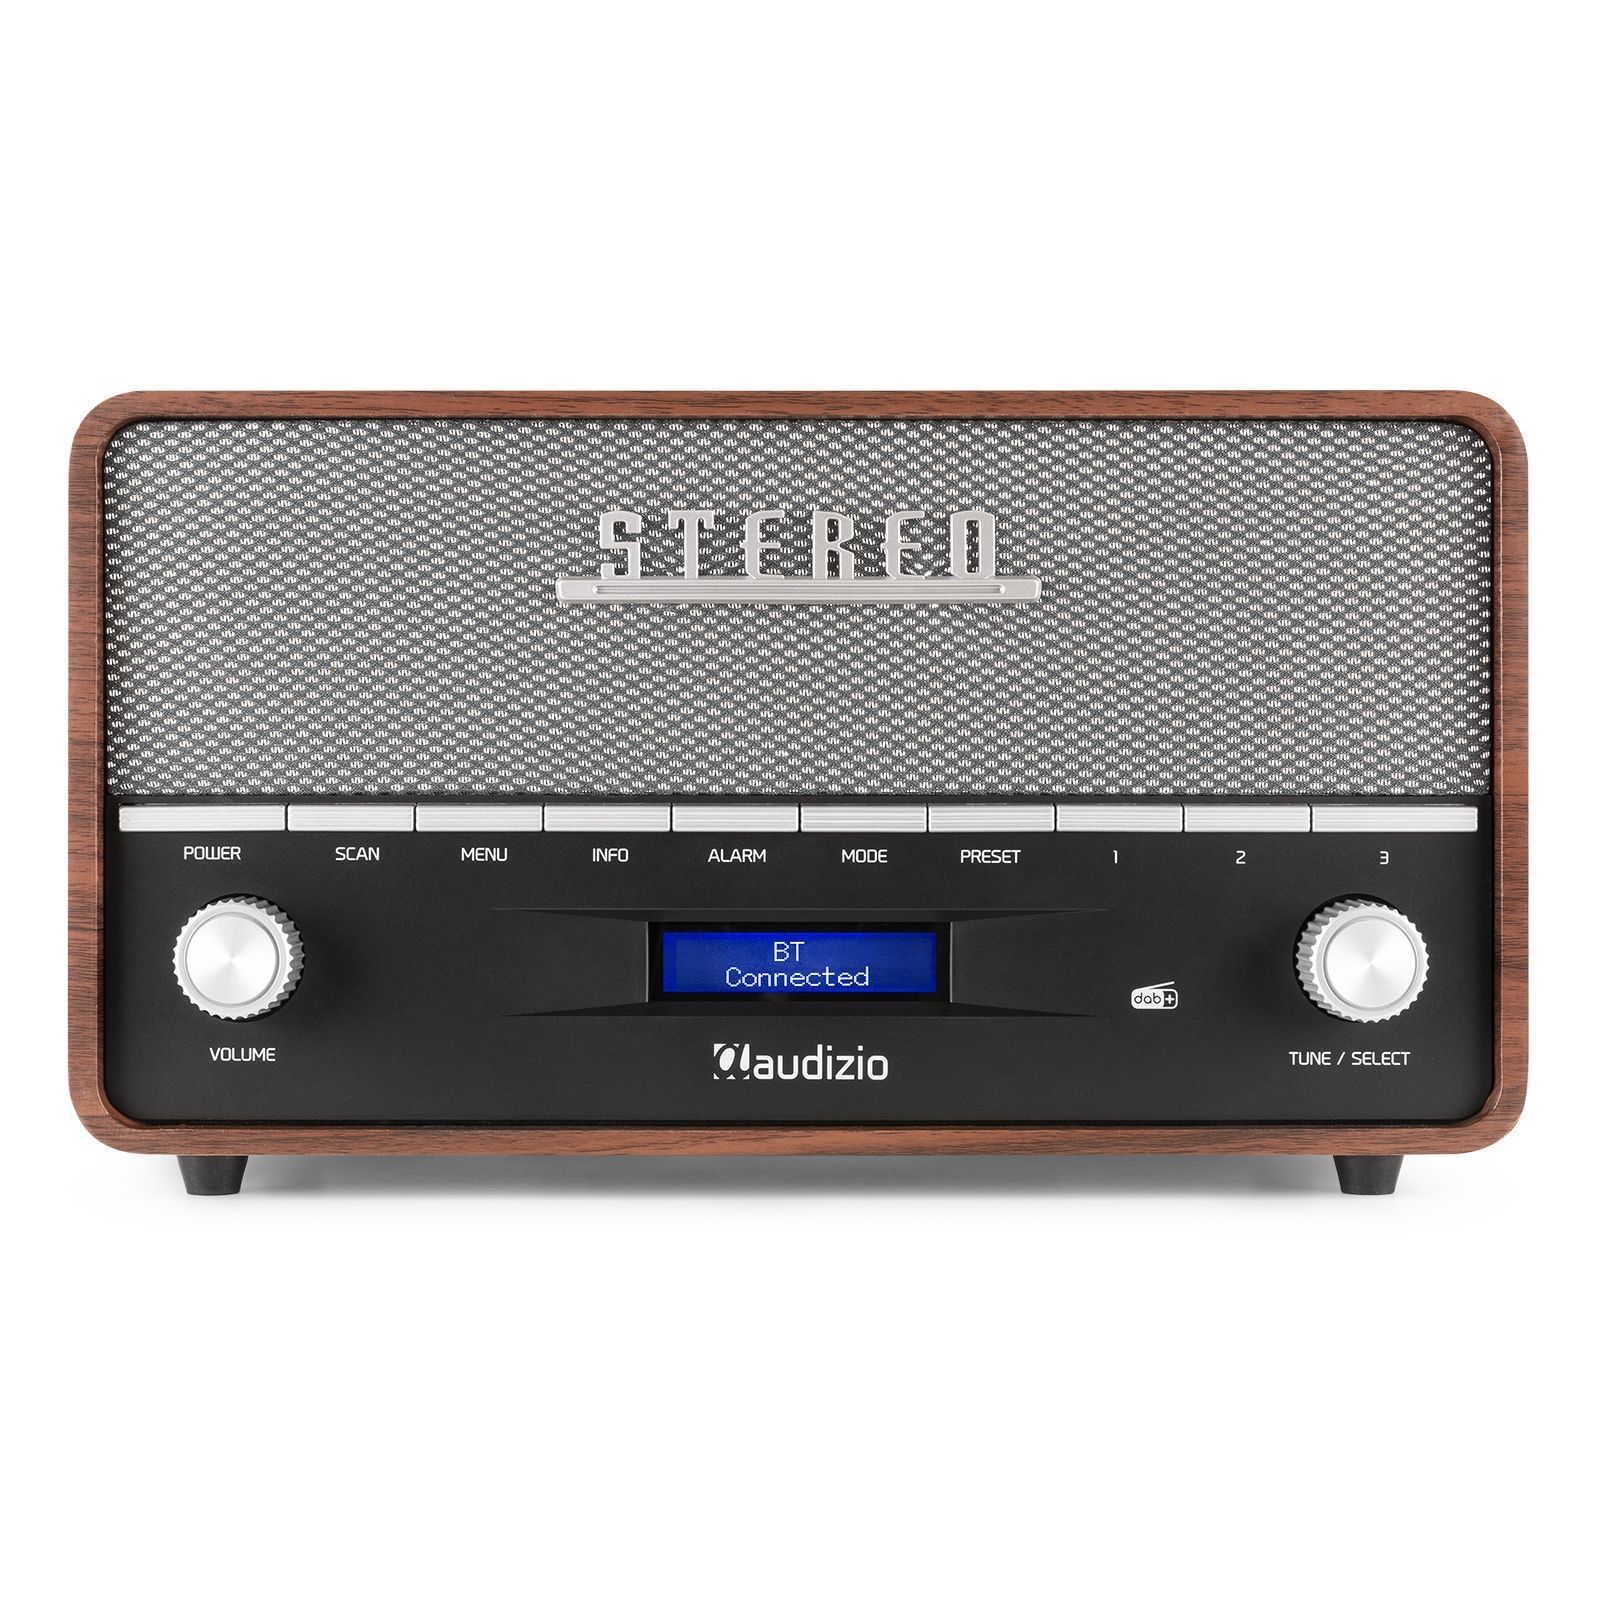 Audizio Corno retro DAB+ radio med Bluetooth - Bärbar stereoradio med larm - 60W Peak effekt - Grå